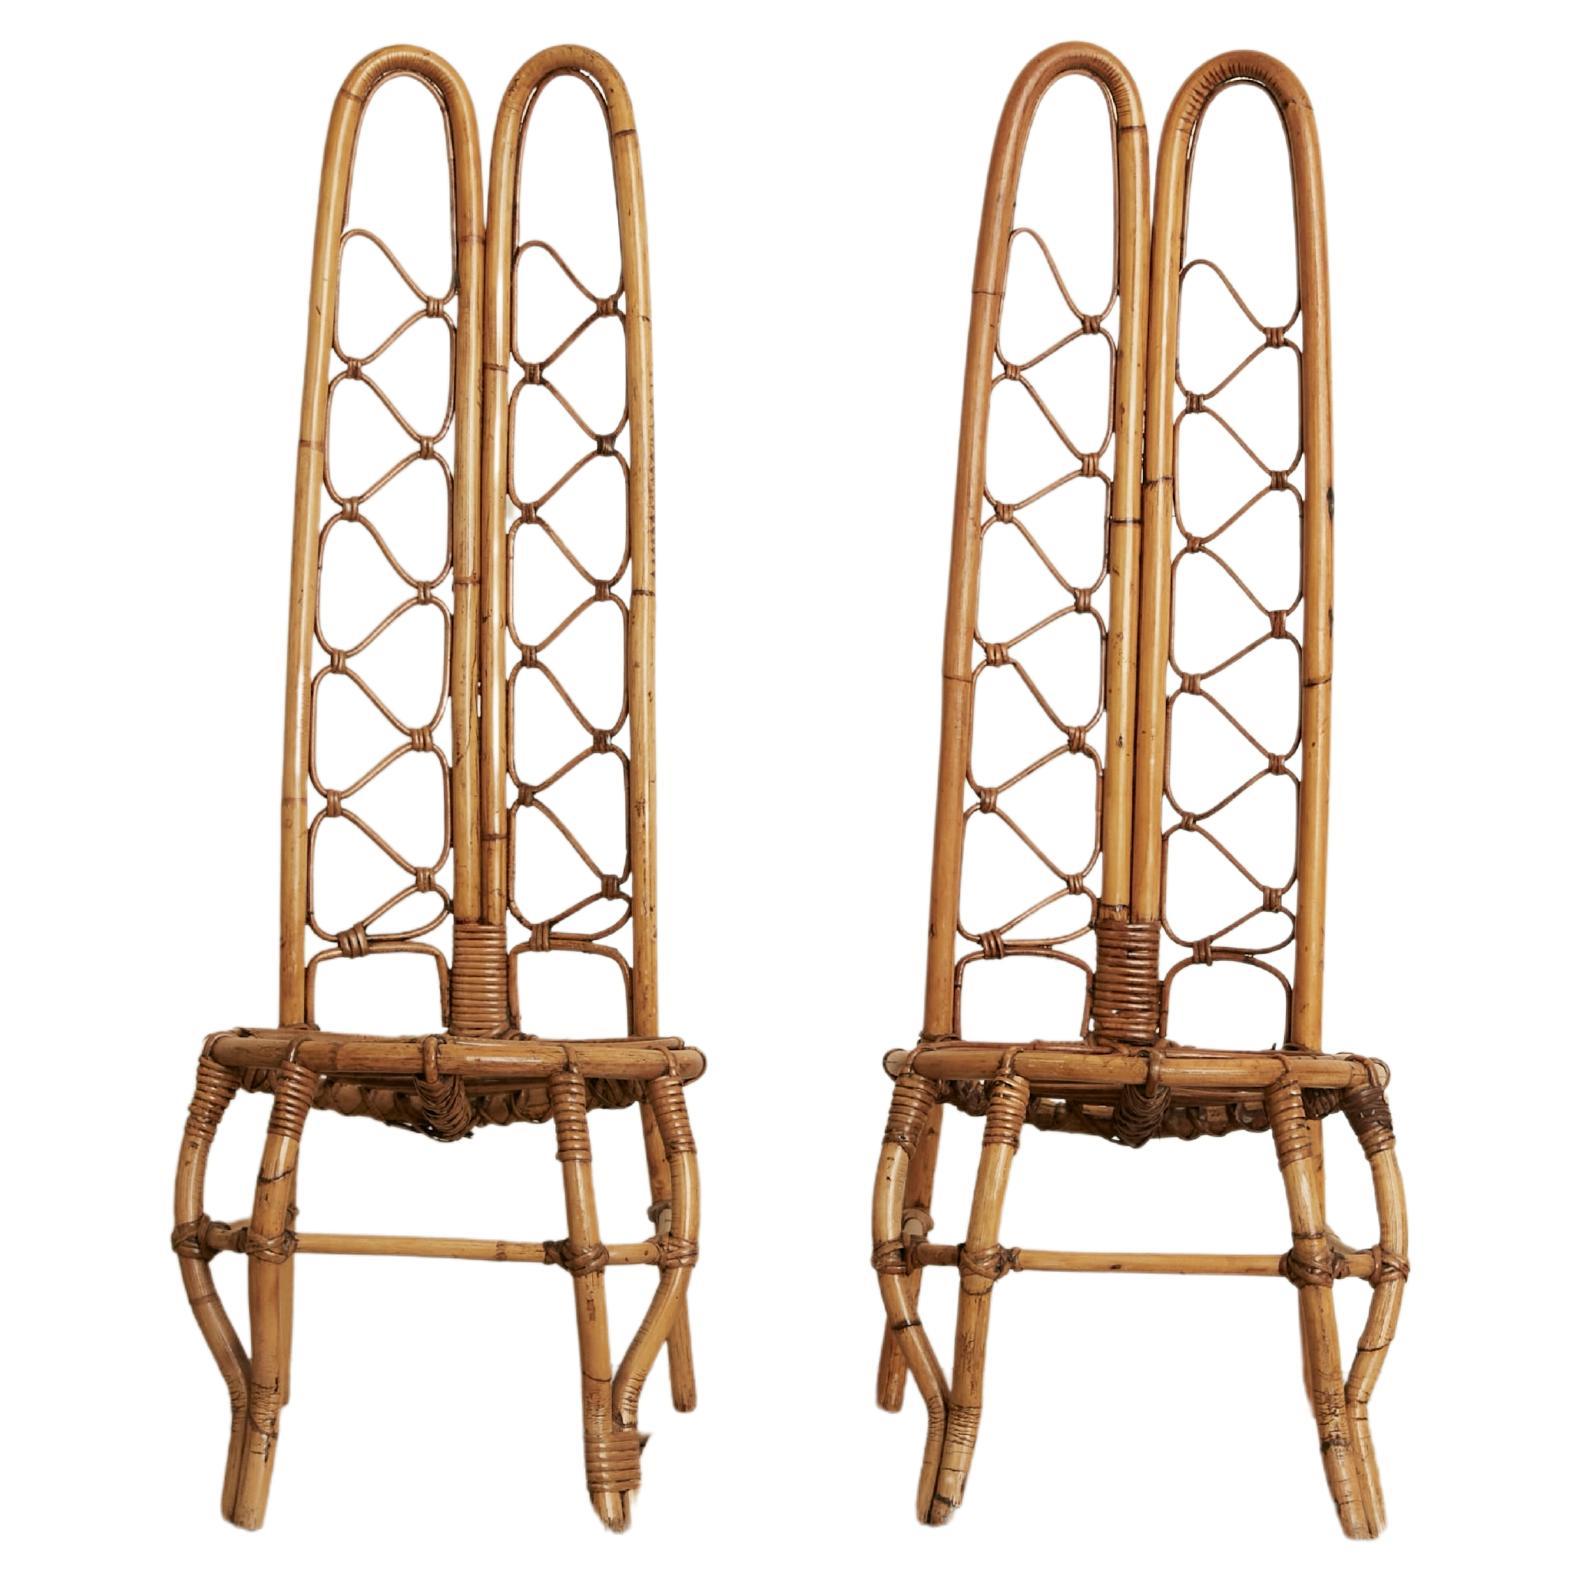 Bamboo Riviera chairs from the 60's, Dirk Van Sliedrecht models